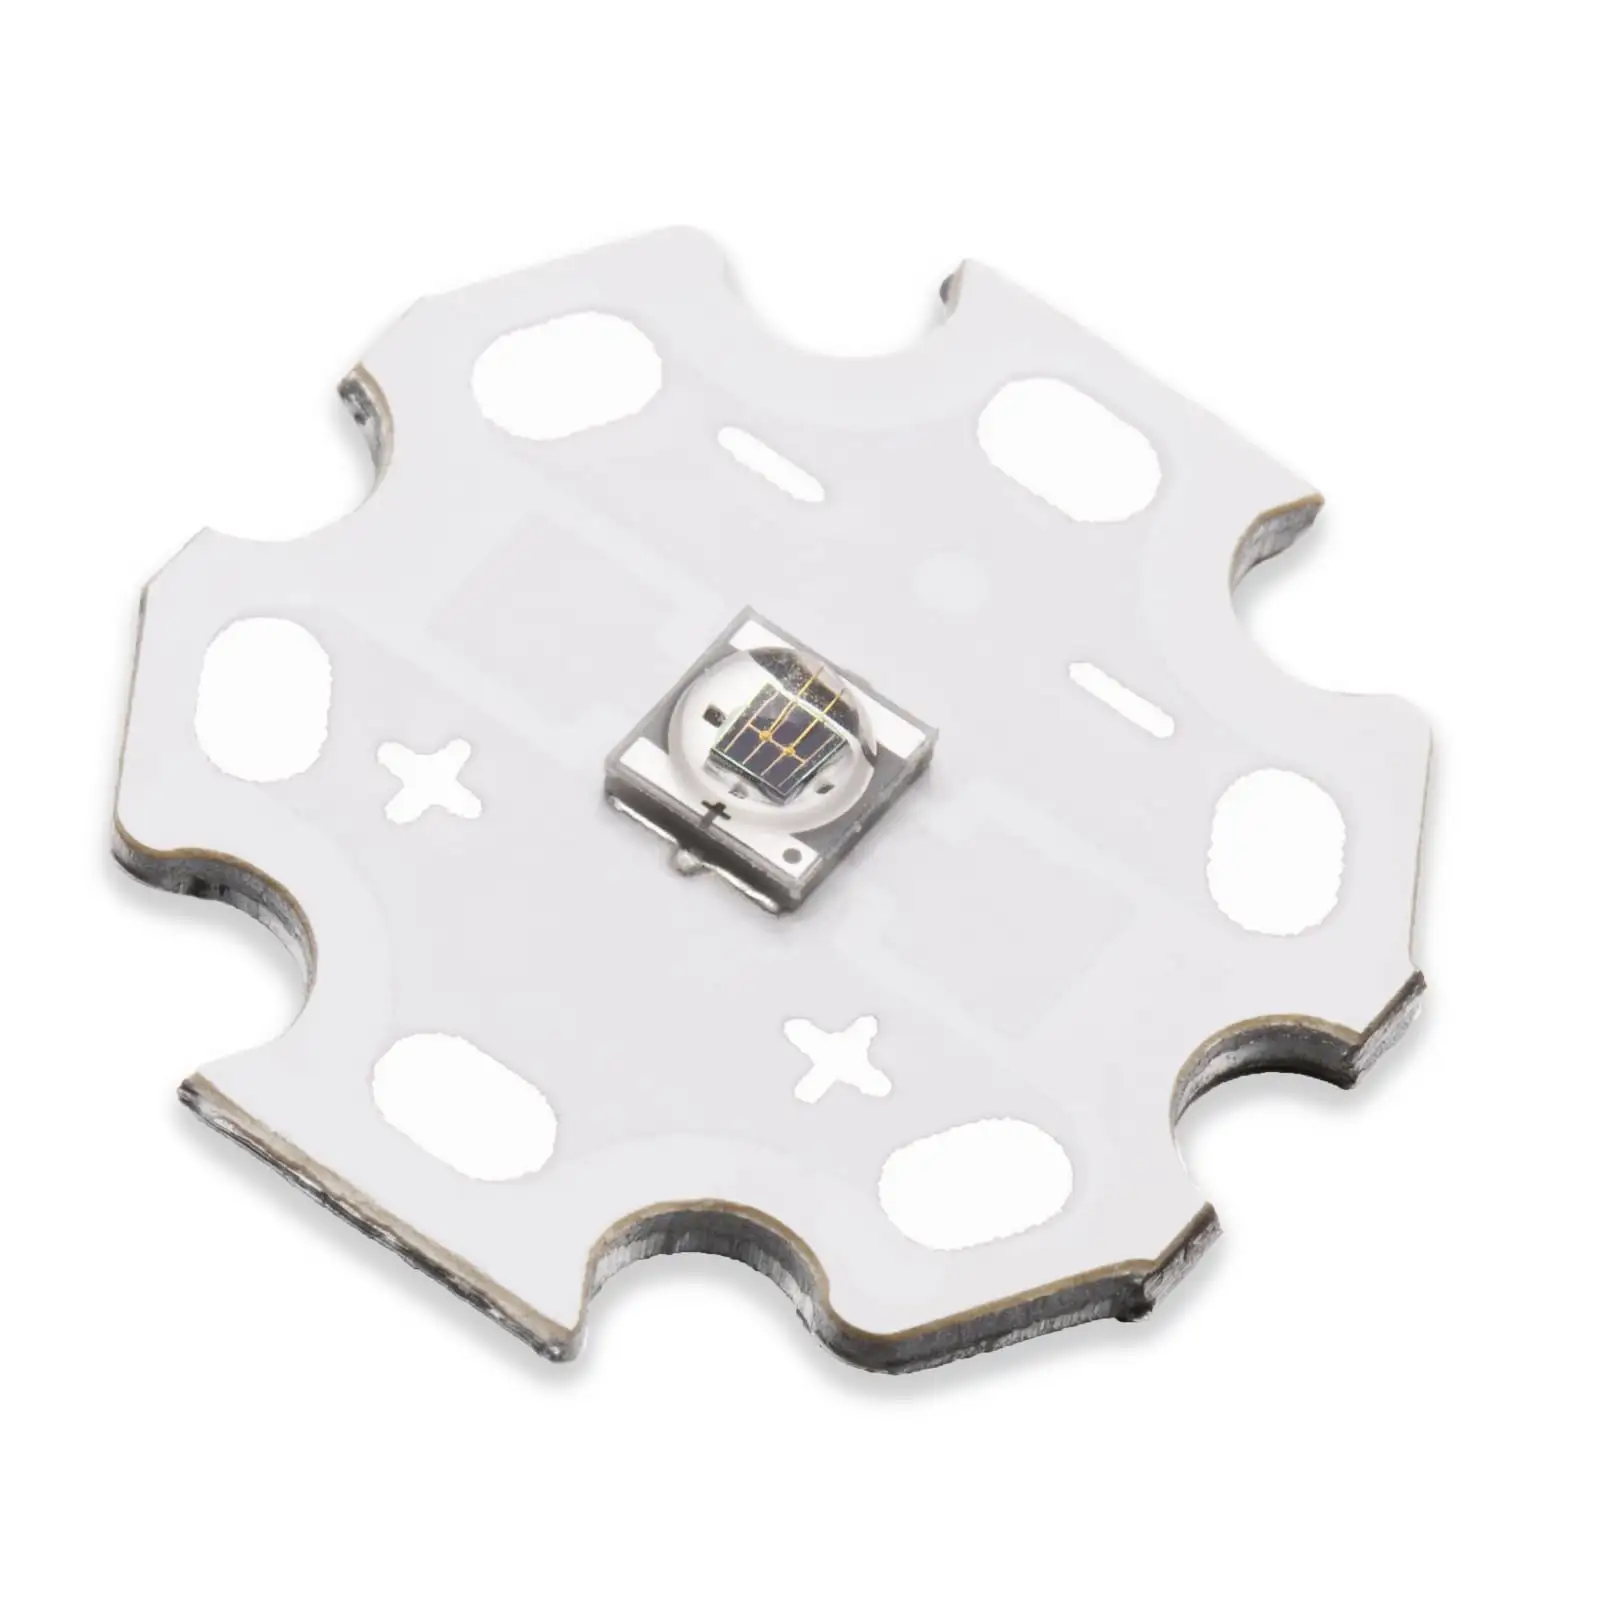 Chip LED de alta potencia IR 3535 SMD 3W con placa de aluminio Disipador de calor de base de PCB de estrella de 20mm para transmisor infrarrojo